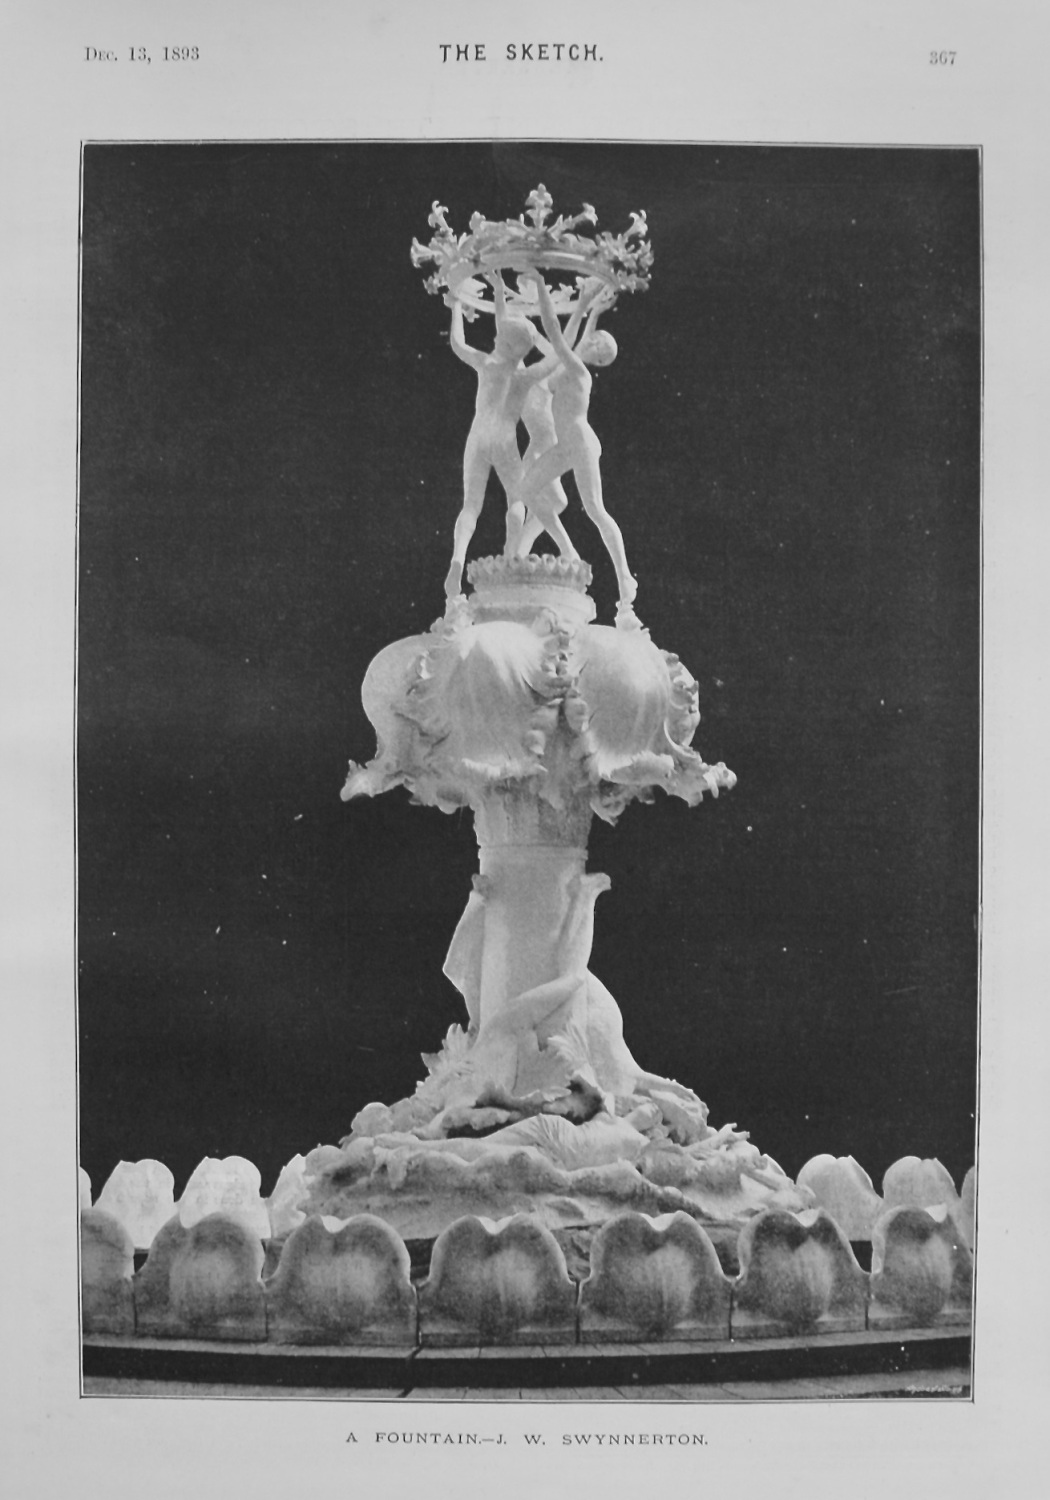 A Fountain.- J. W. Swynnerton. (Sculptor) 1893